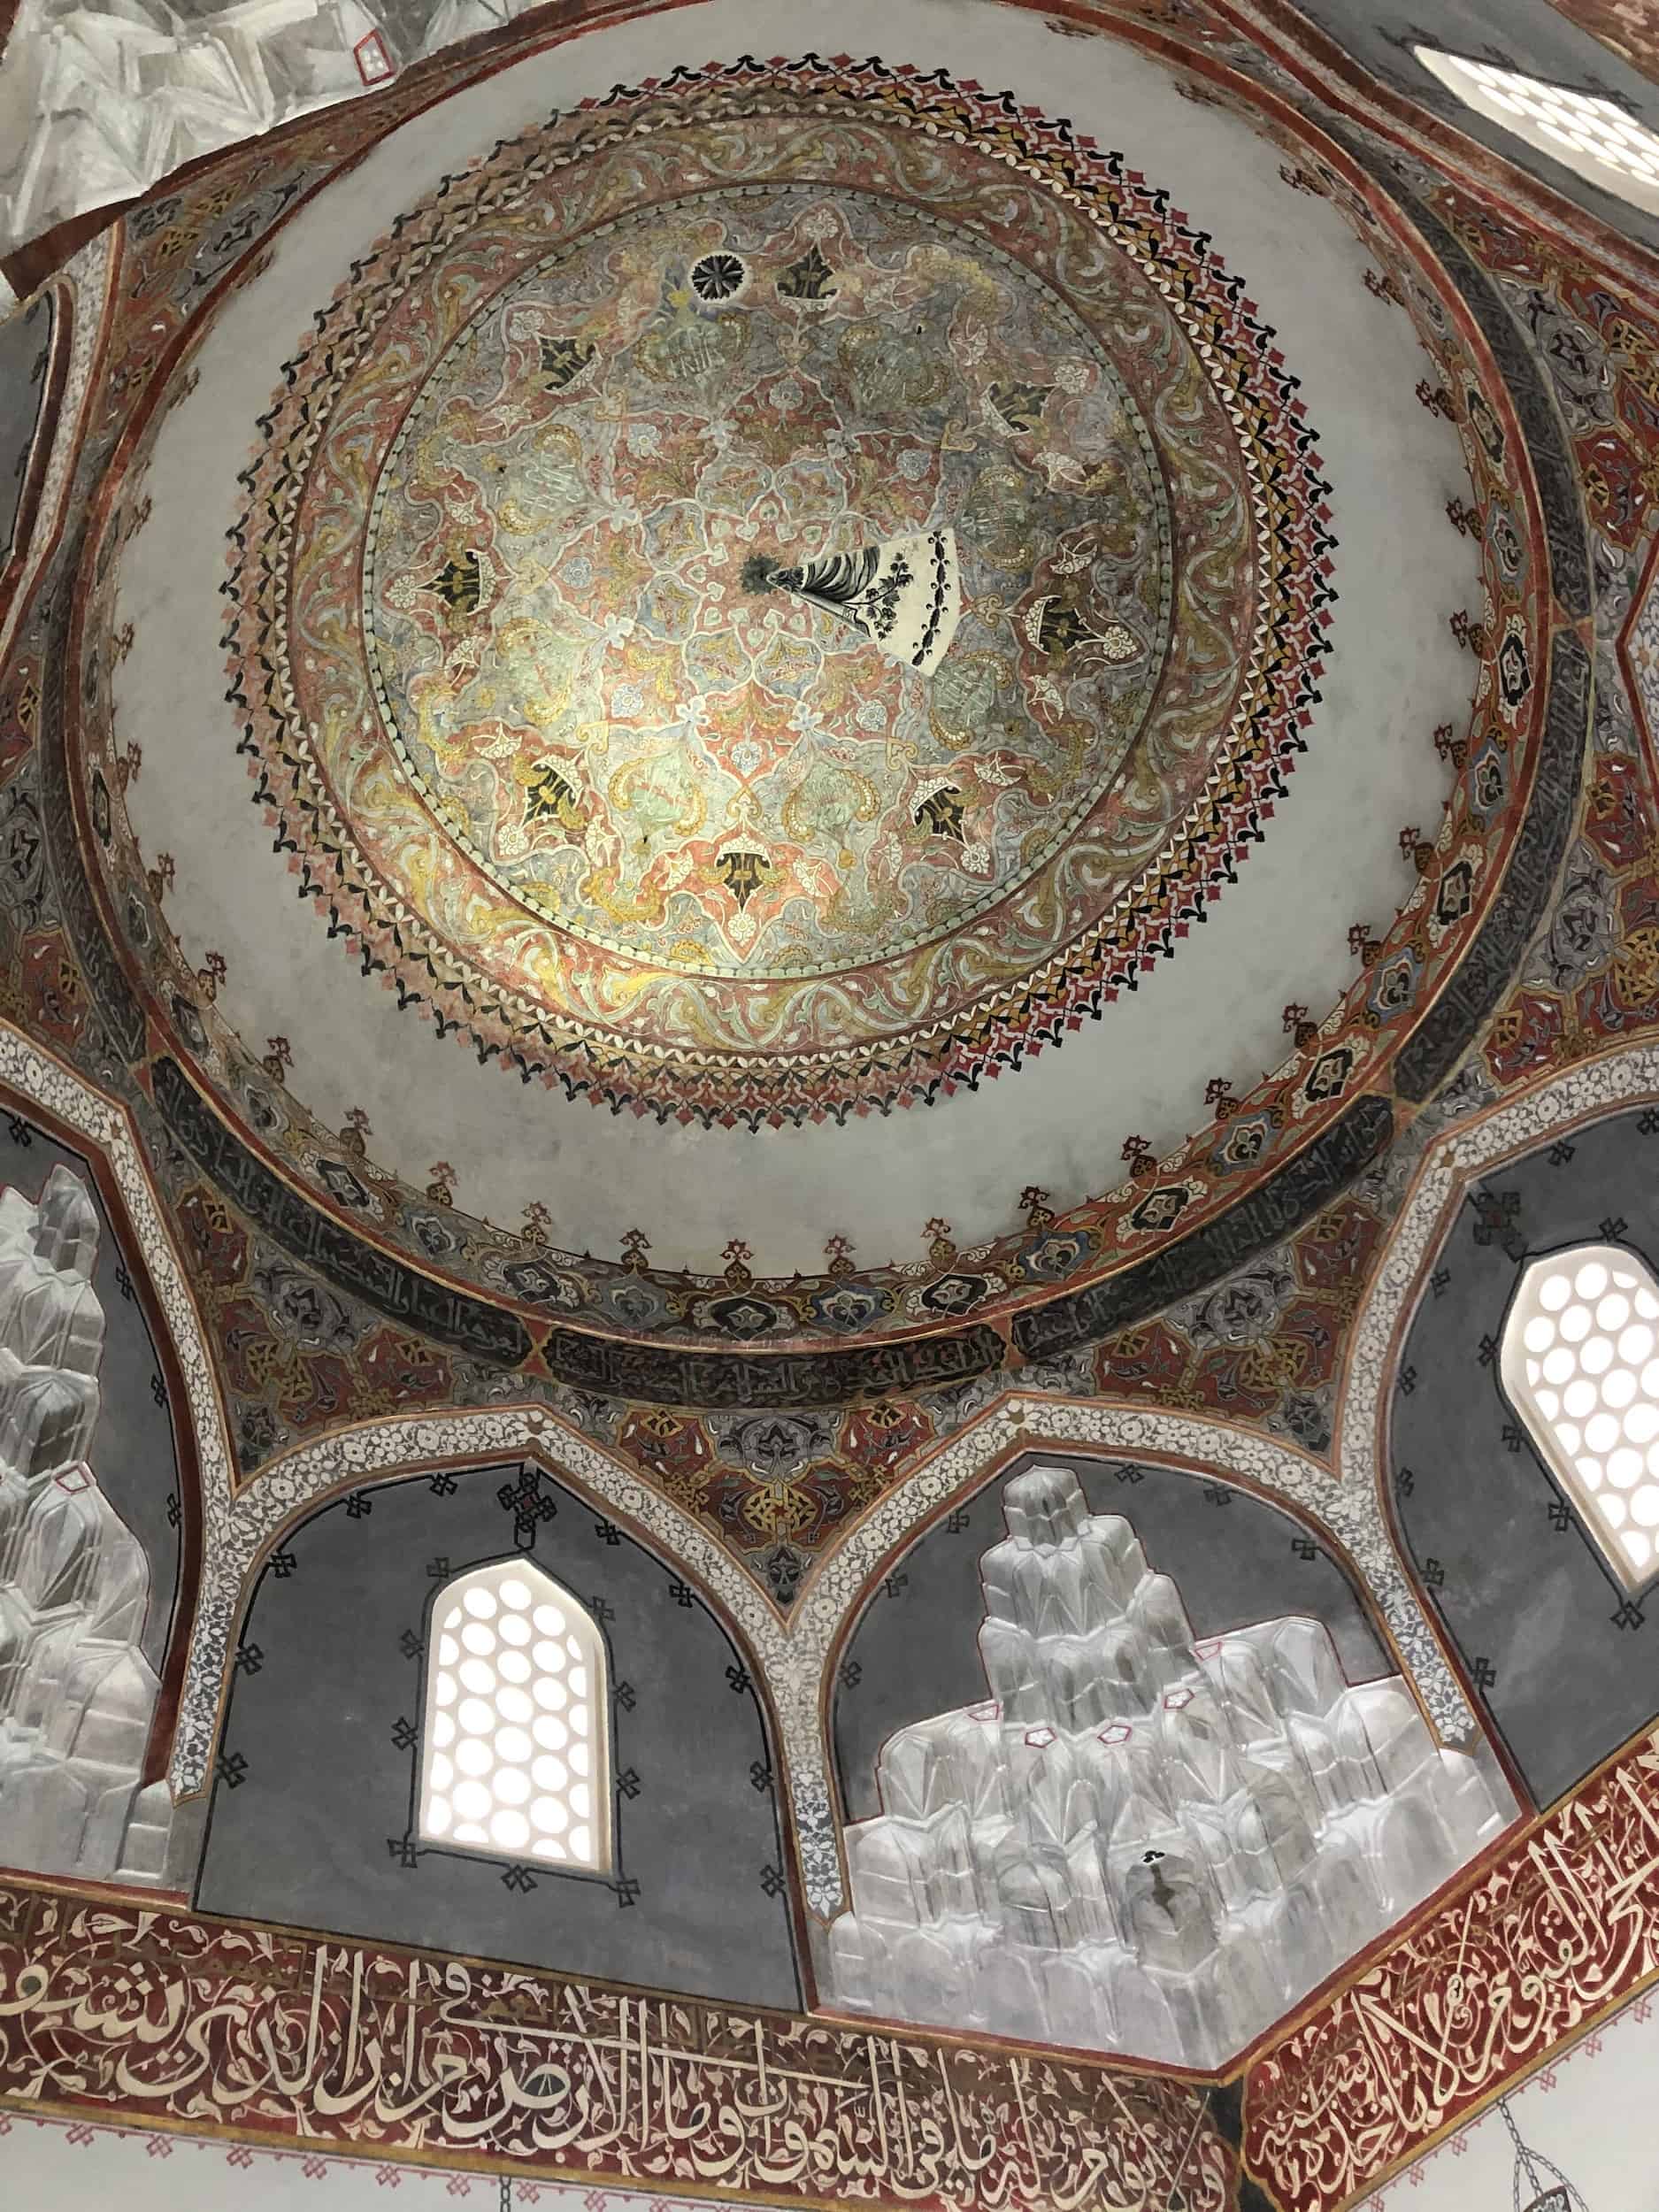 Dome of the tomb of Gülruh Hatun